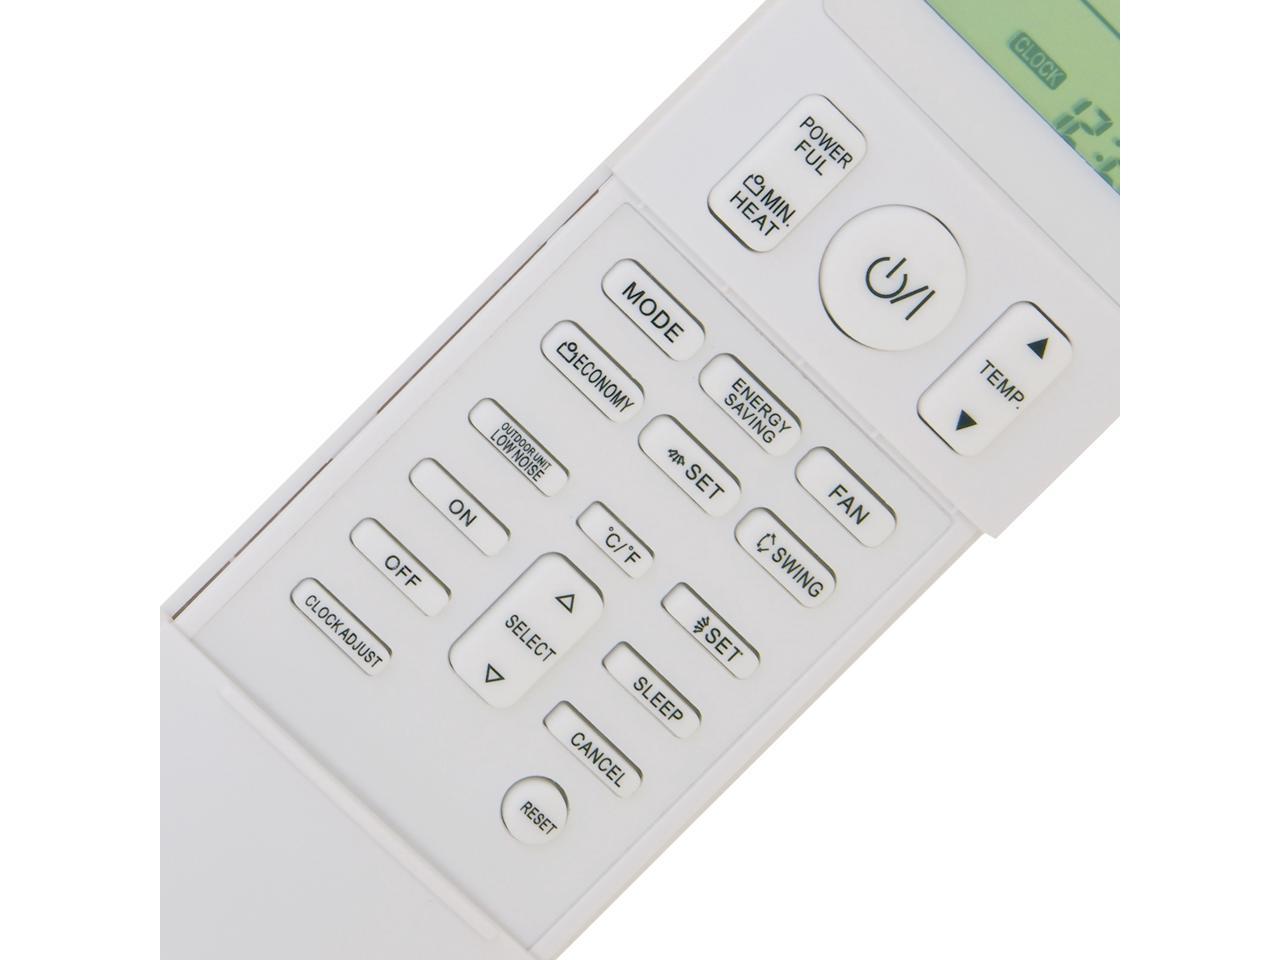 Fujitsu Wireless Remote Control Model AR-REM1U 